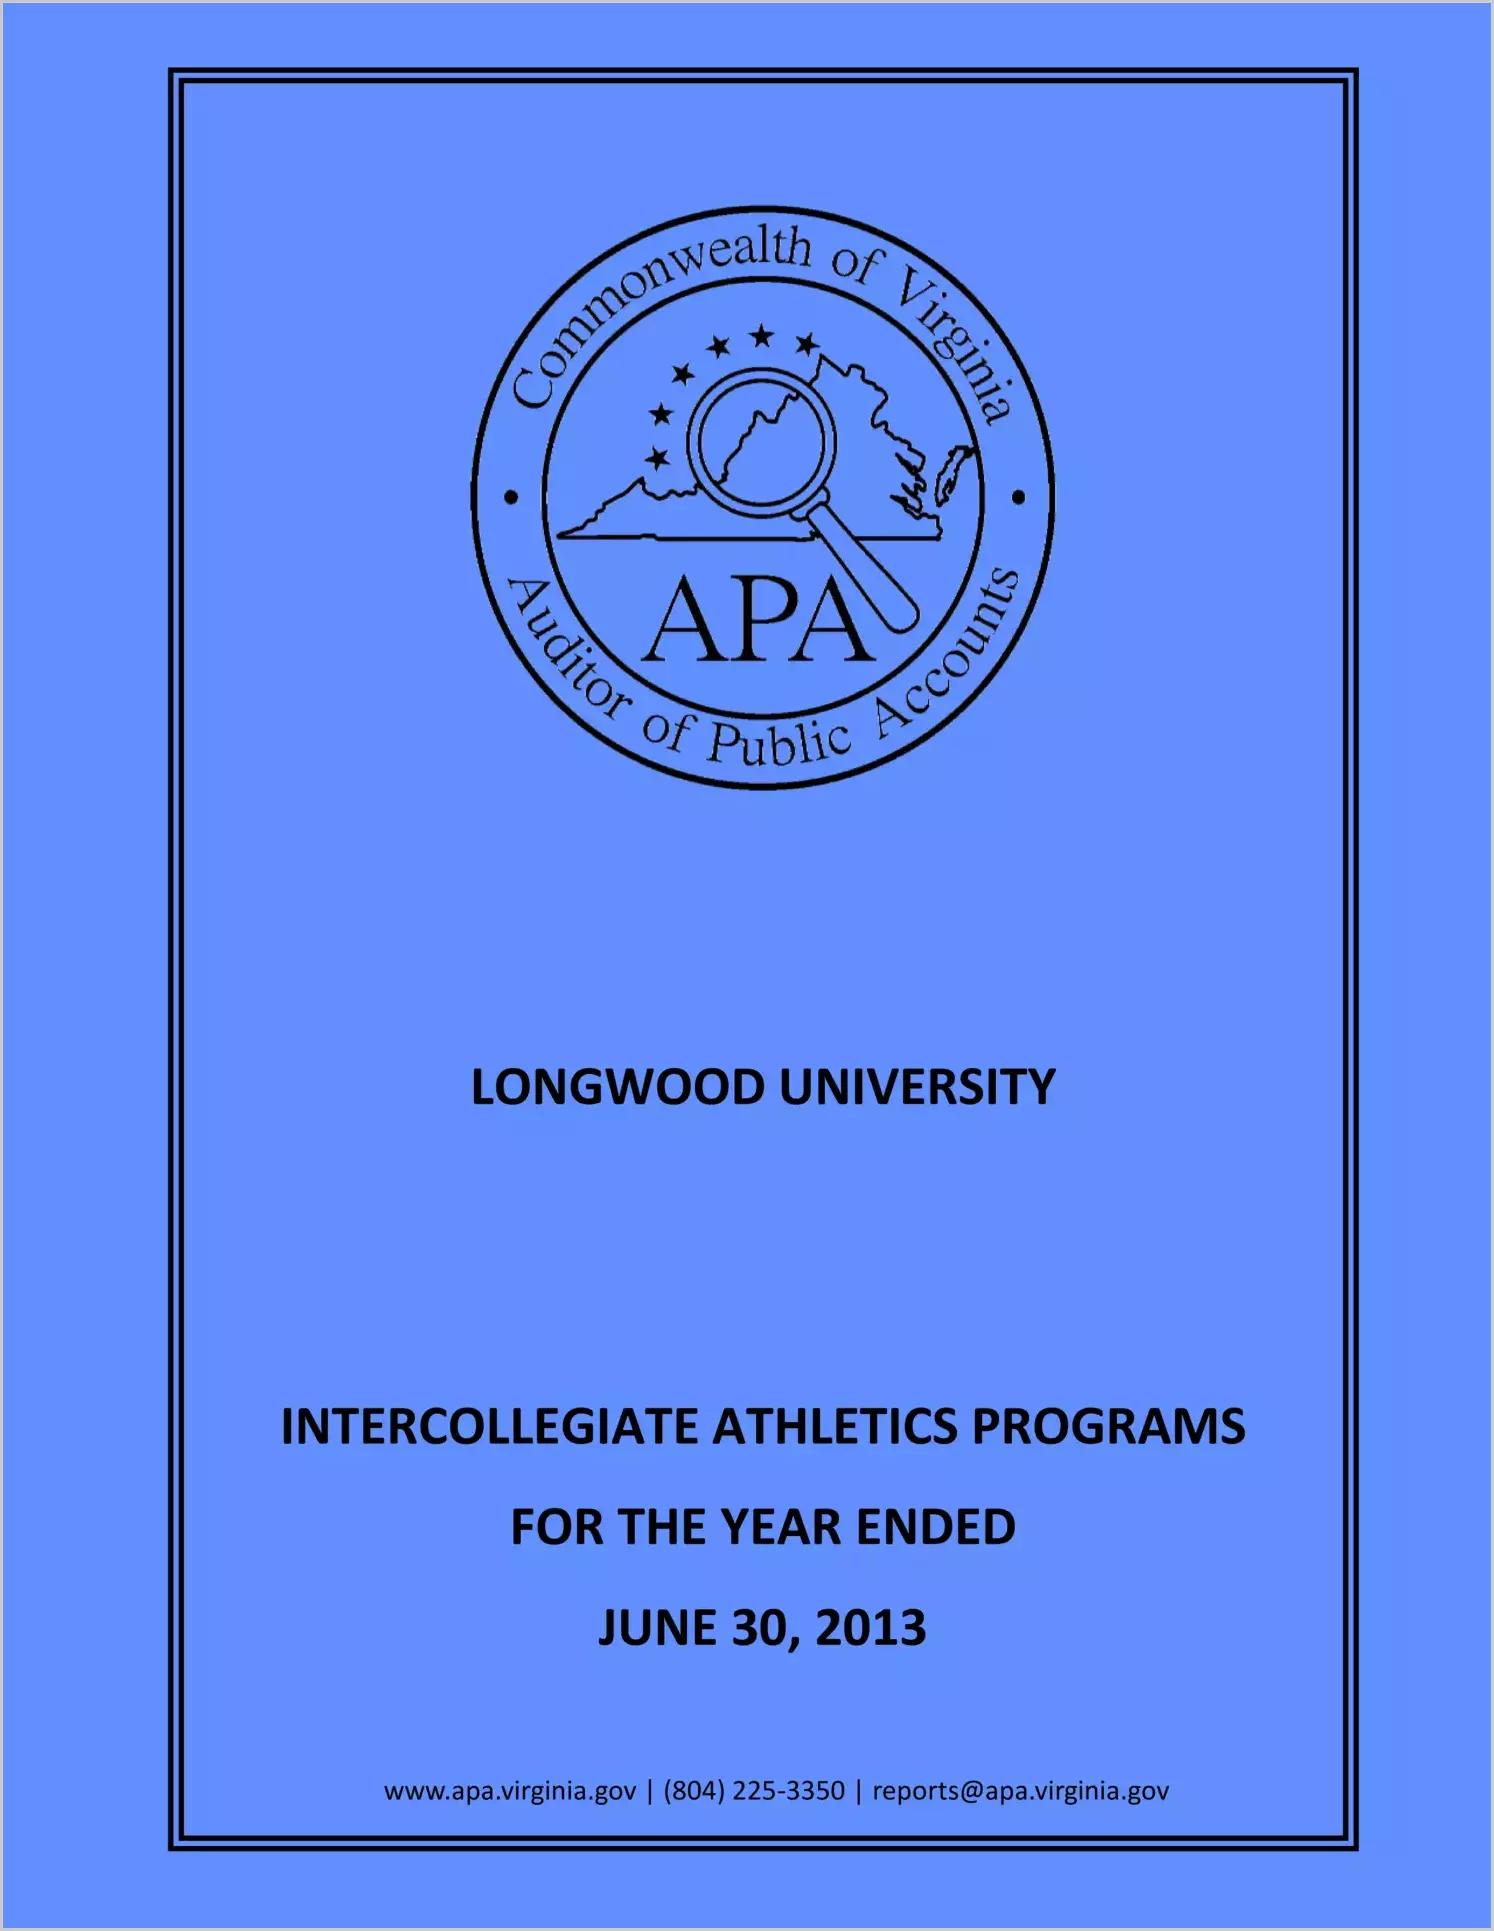 Longwood University Intercollegiate Athletics Programs report for the year ended June 30, 2013